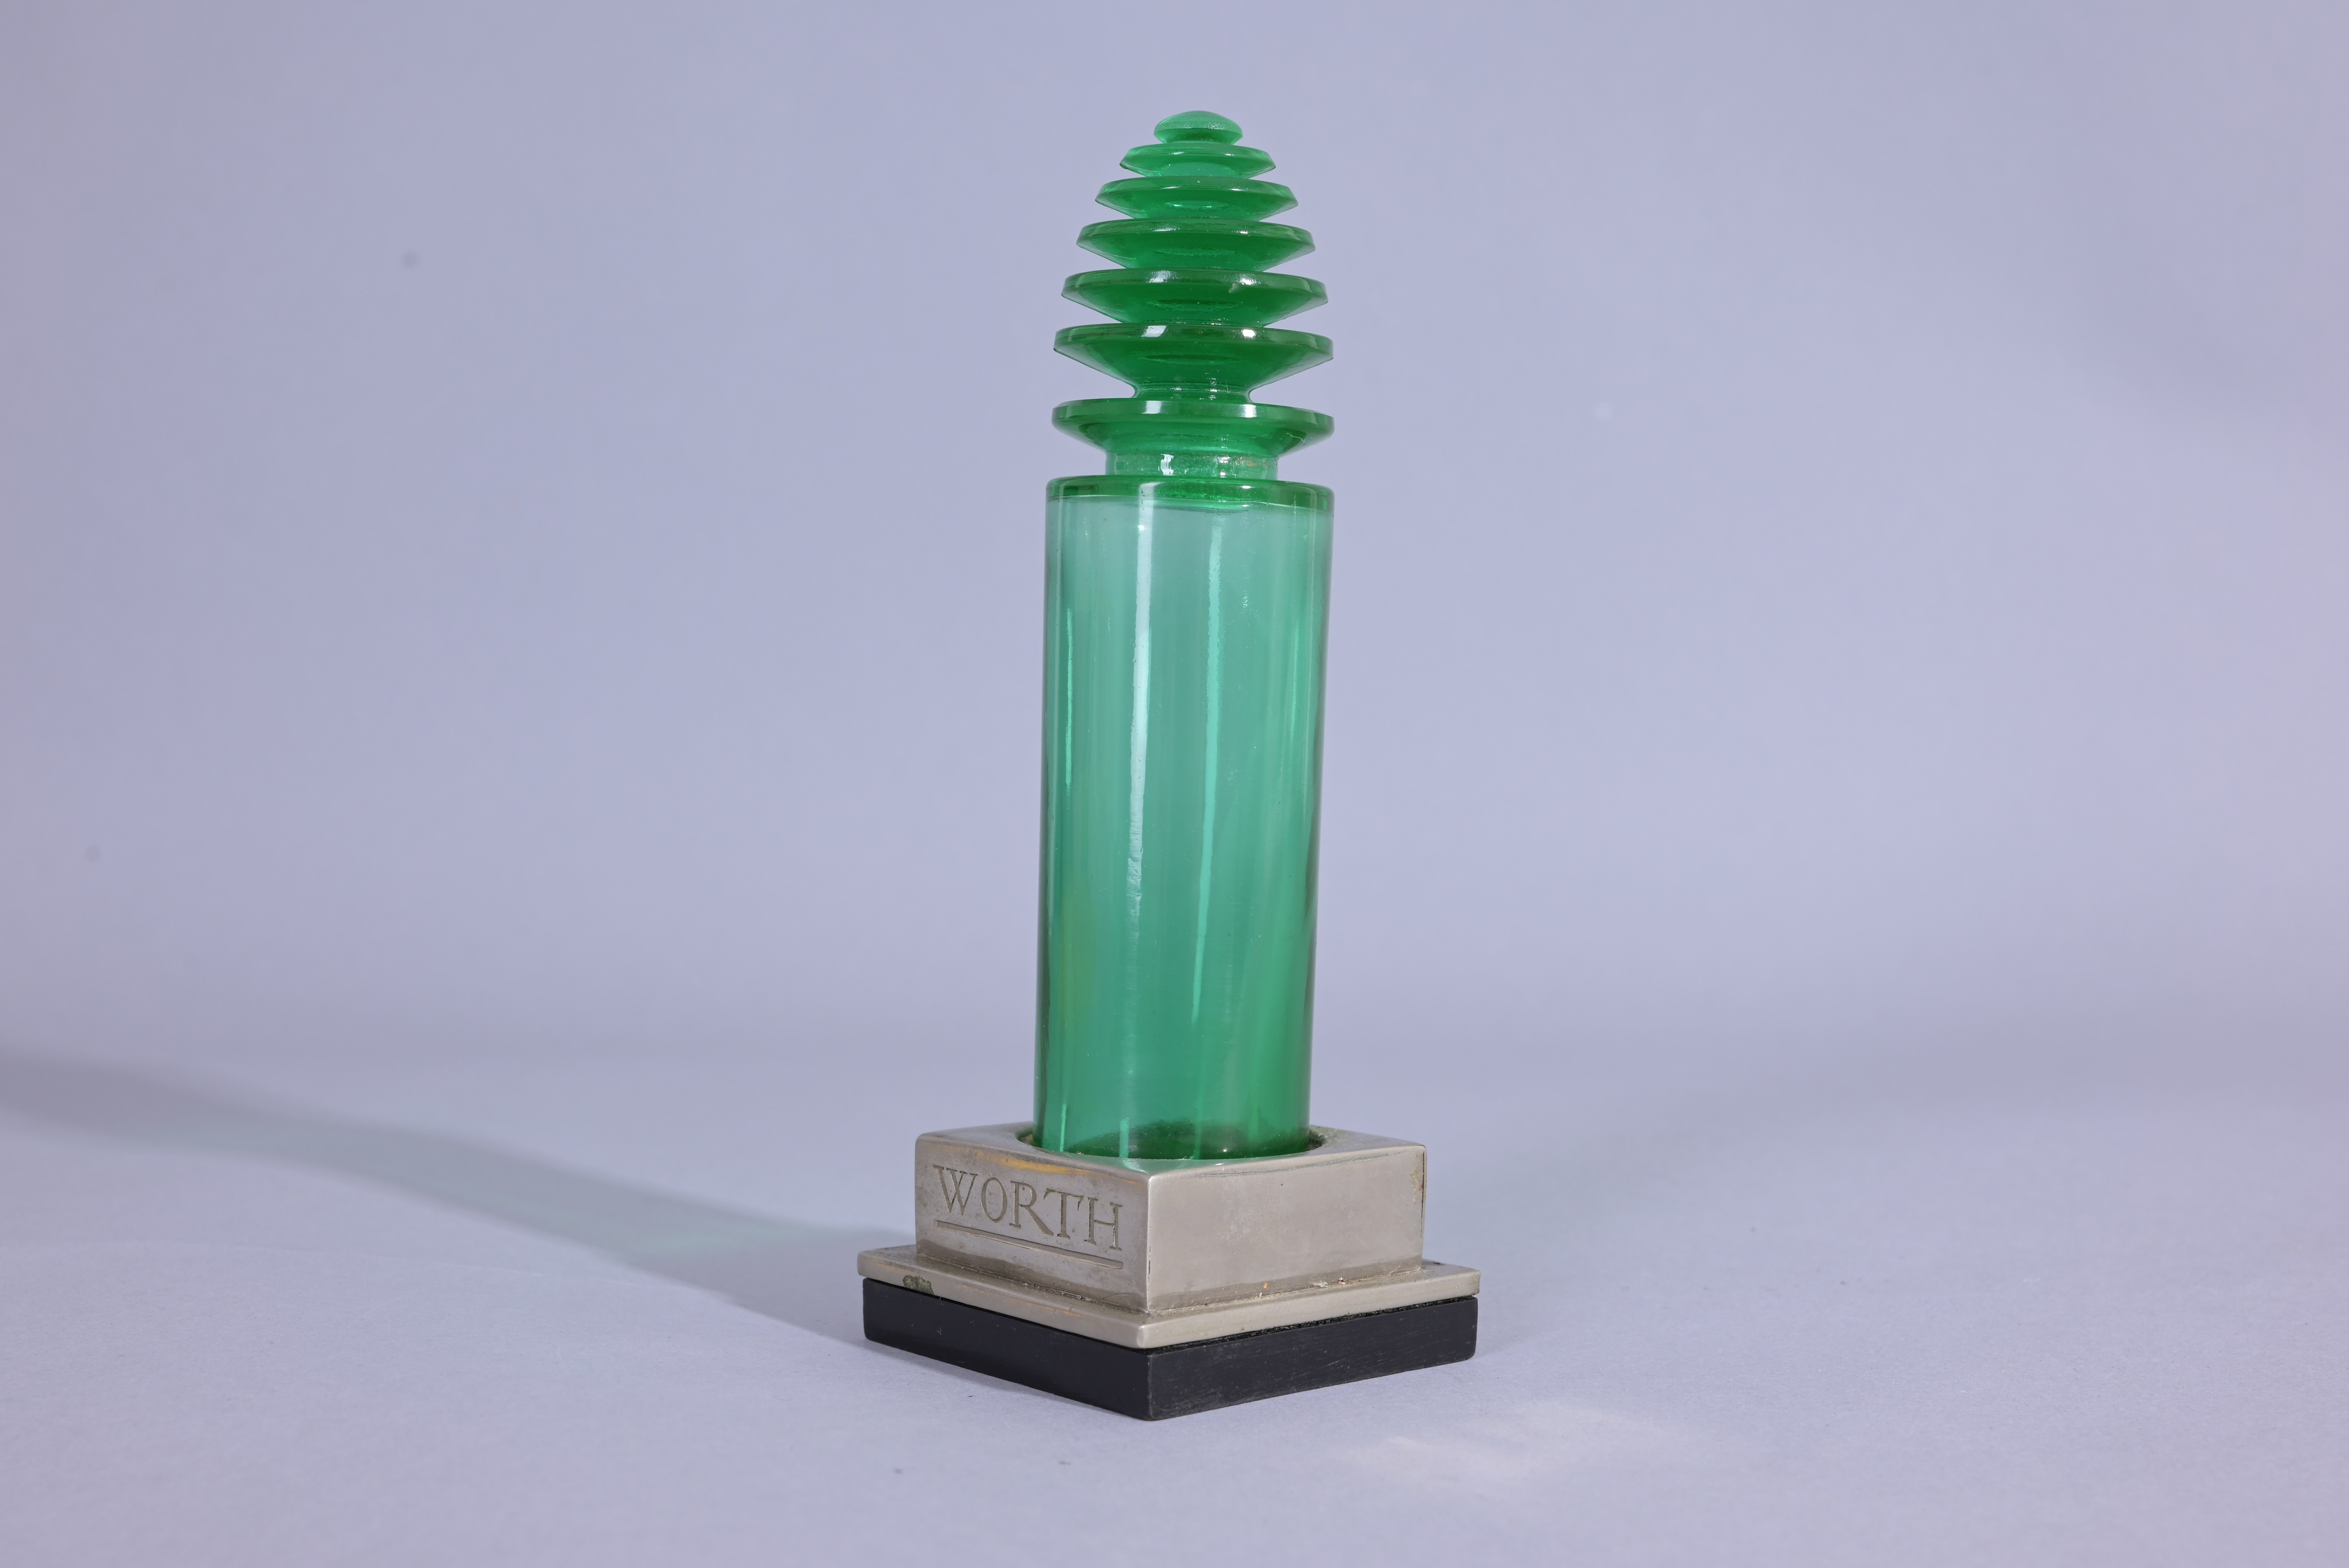 Rene Lalique "Sans Adieu" Perfume Bottle - Image 2 of 4